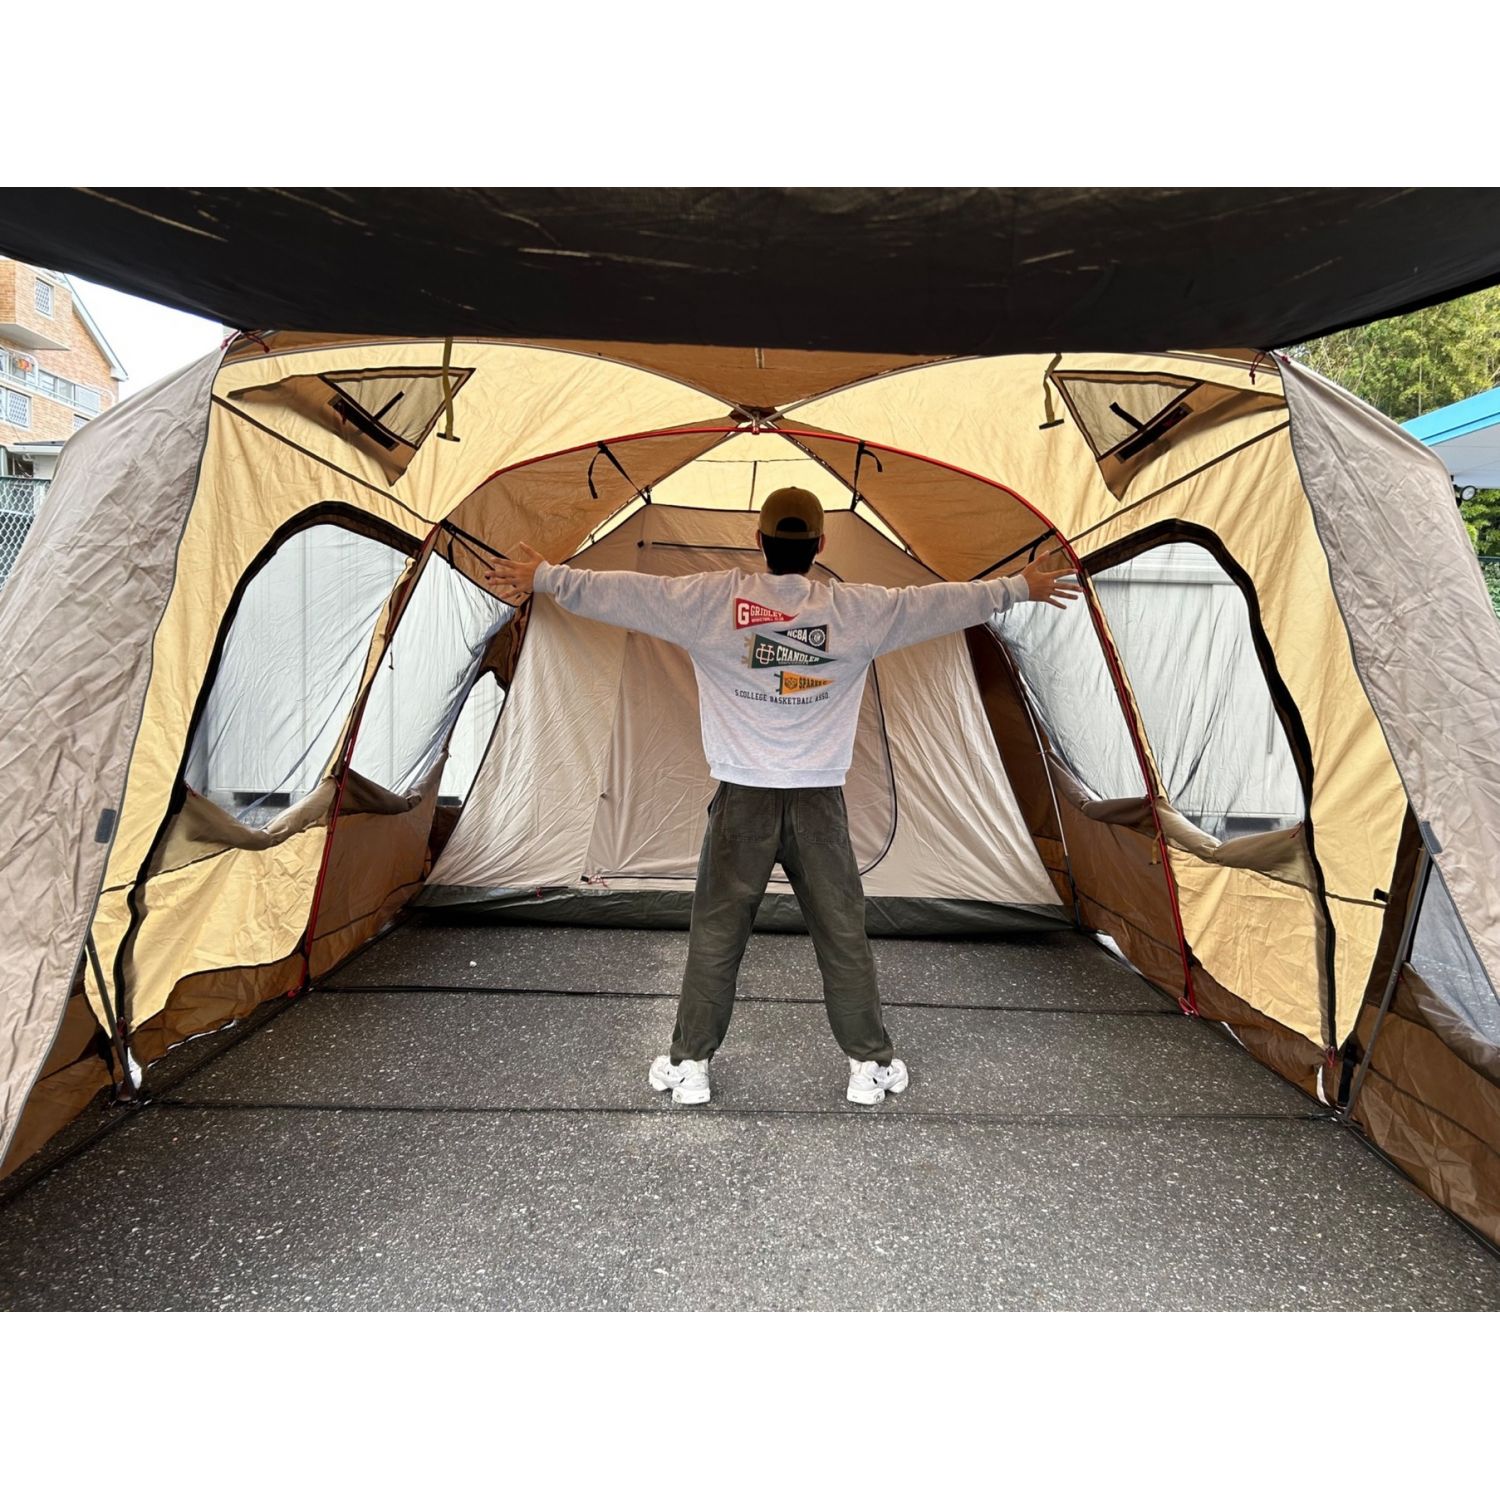 ogawa(オガワ) アウトドア キャンプ テント用 インナーテント ツインクレ